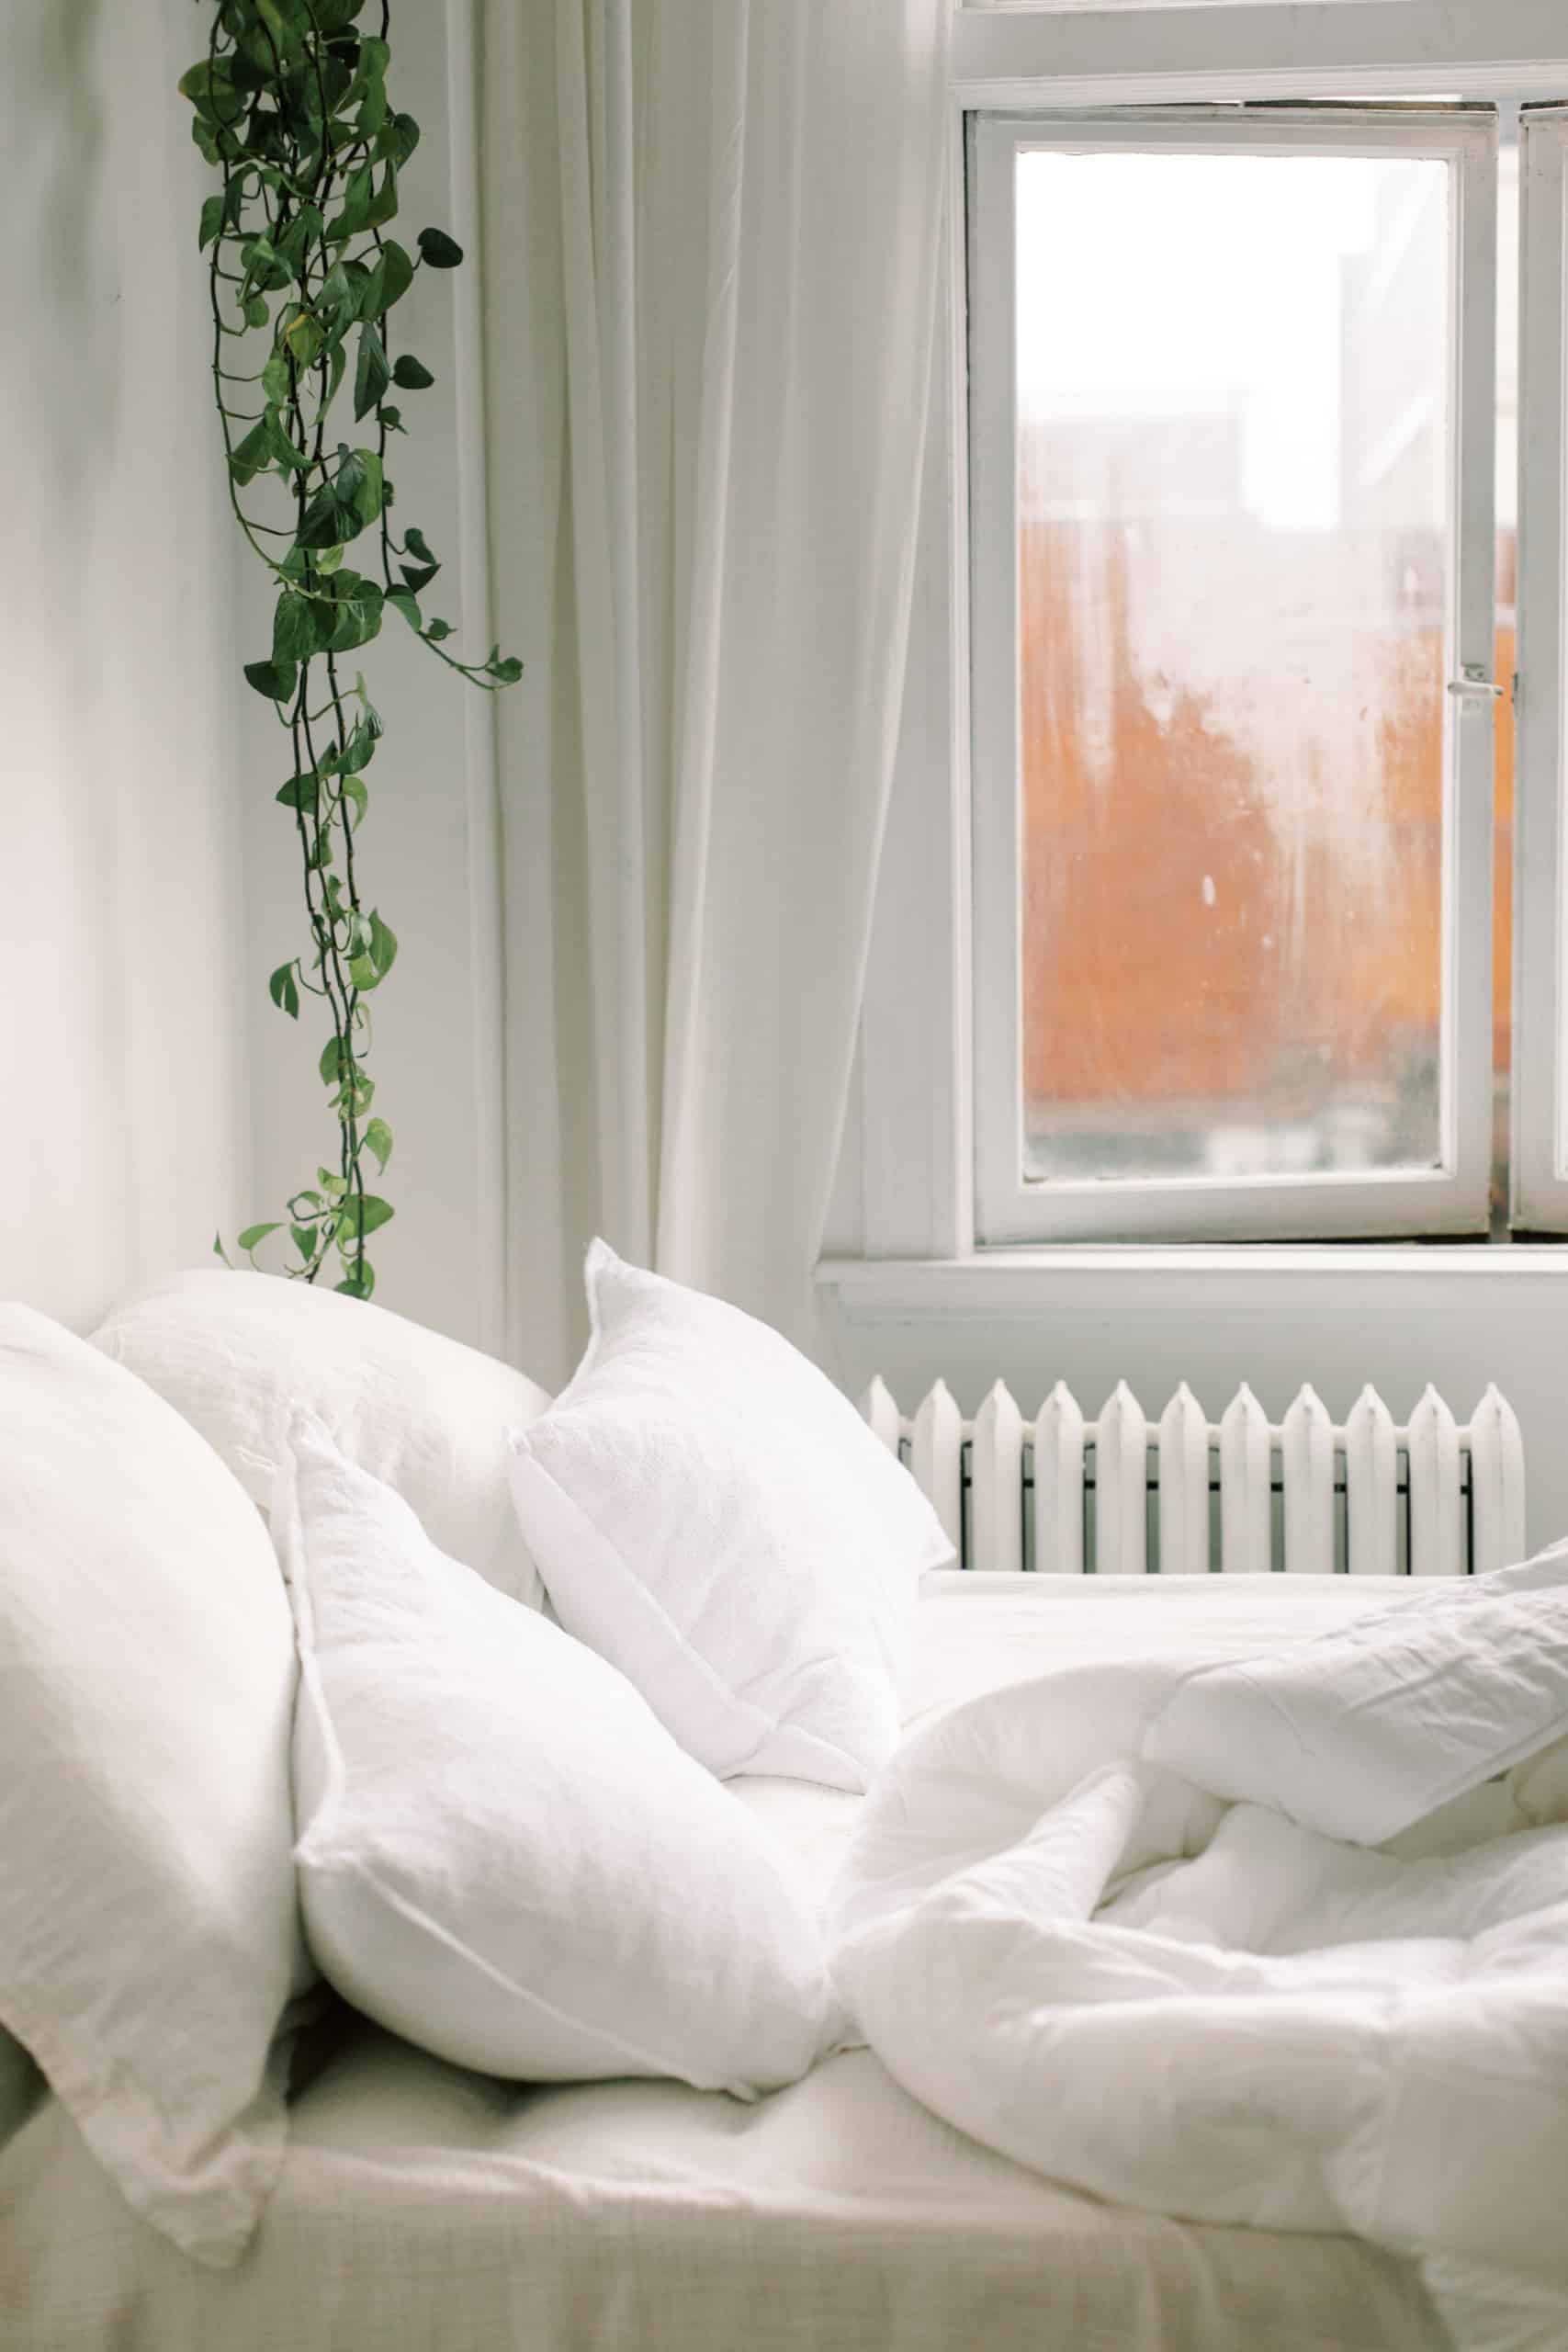 cozy bed next to radator and slighly open window